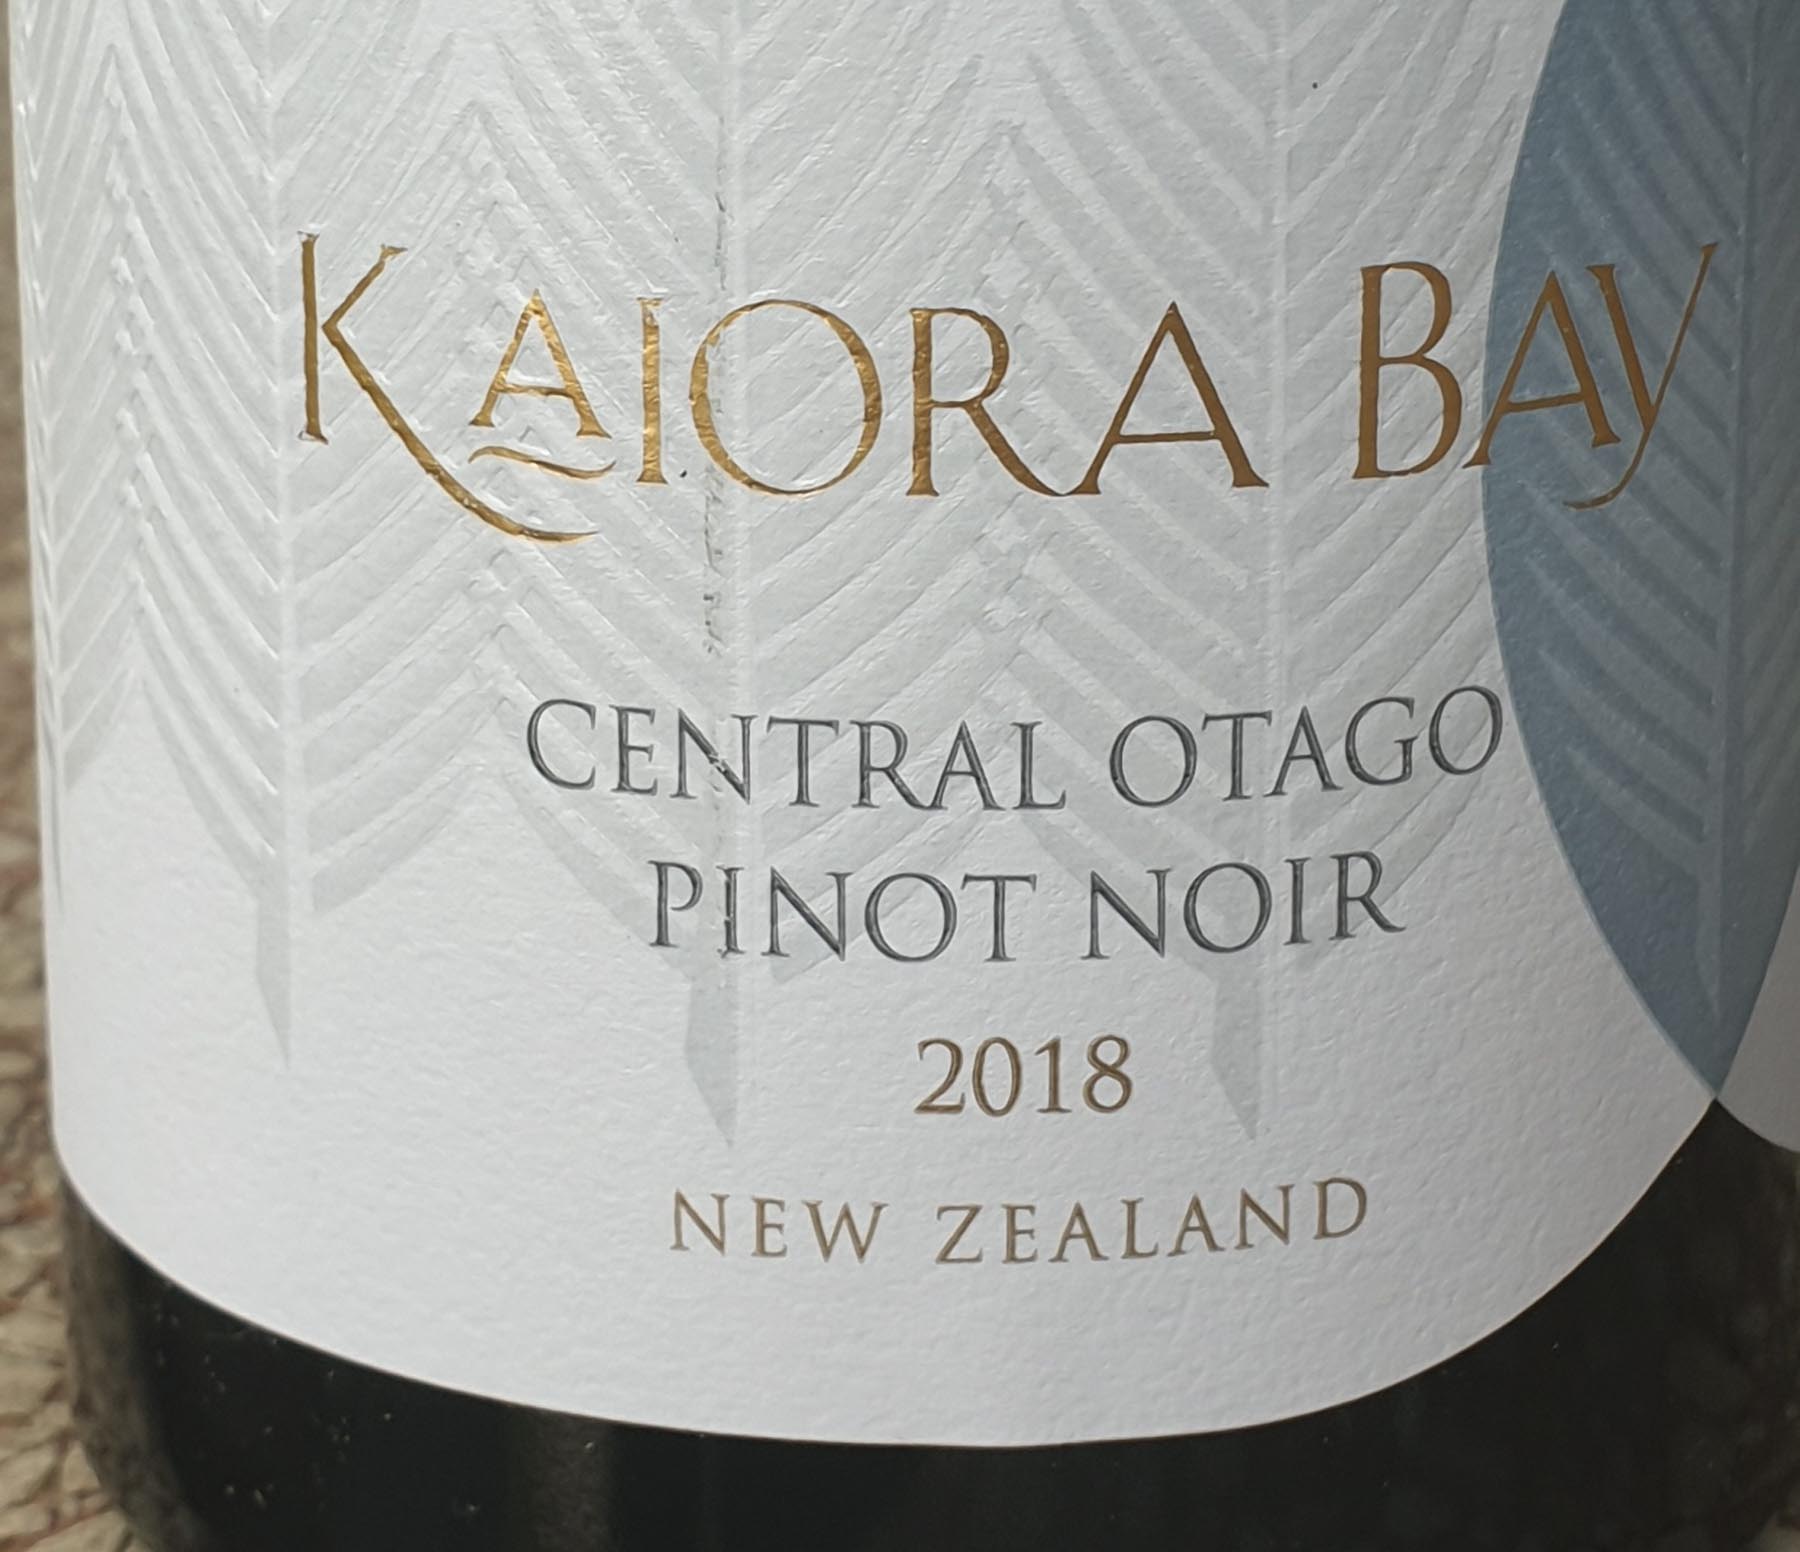 Kaiora Bay Reserve Central Pinot Noir – Otago 2018